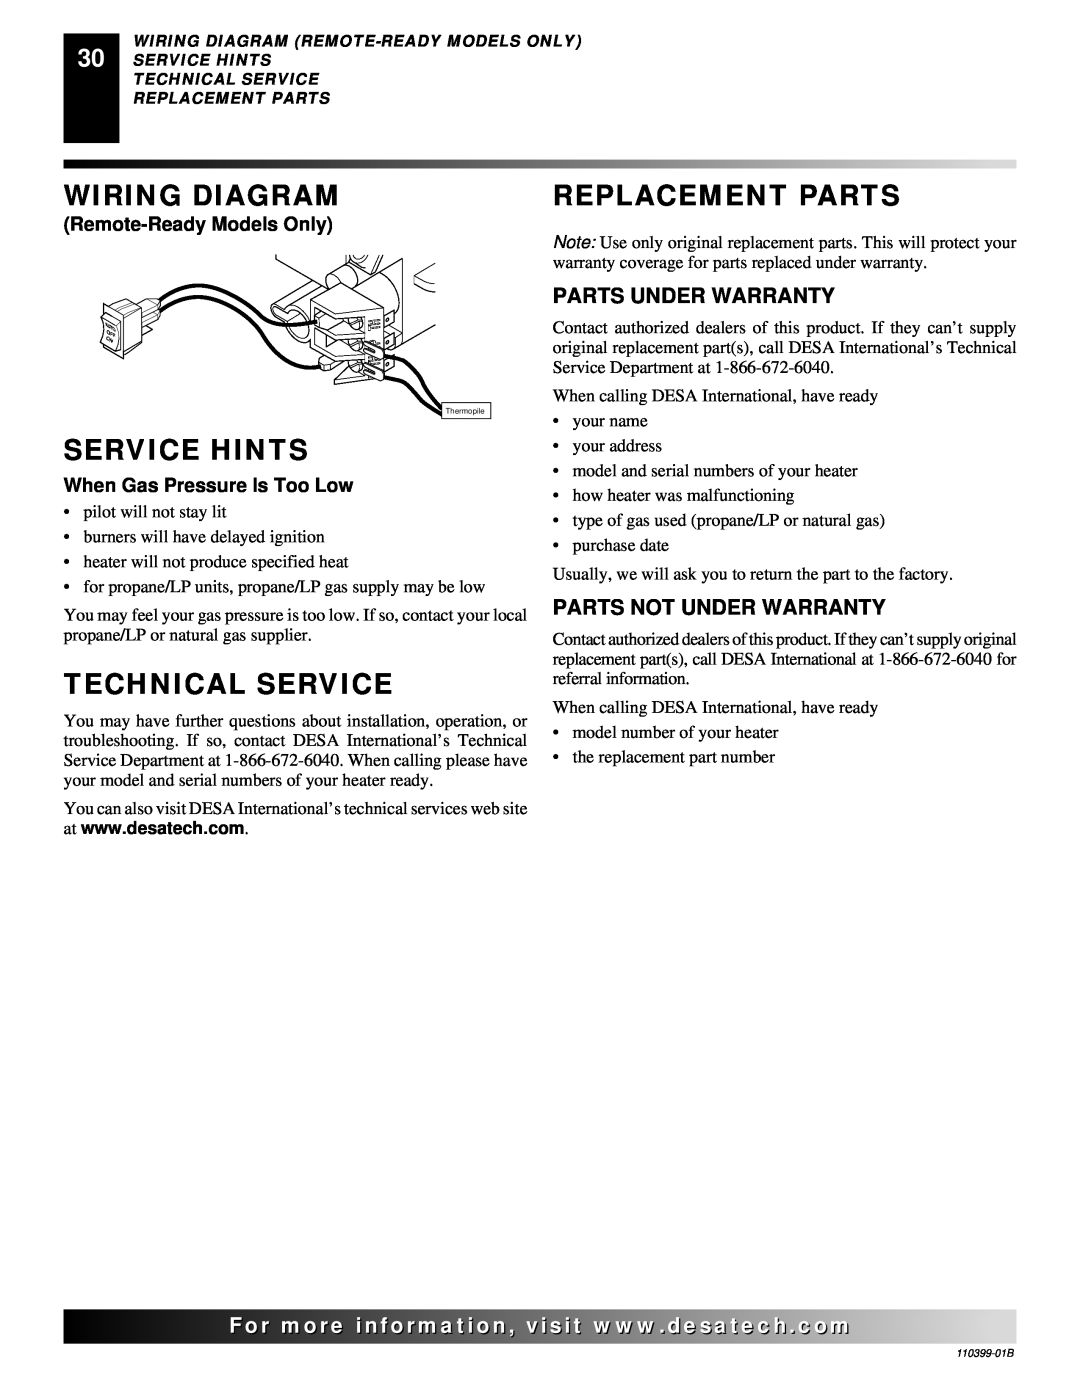 Desa FLAME-MAX VintageOak Wiring Diagram, Service Hints, Technical Service, Replacement Parts, Parts Under Warranty 